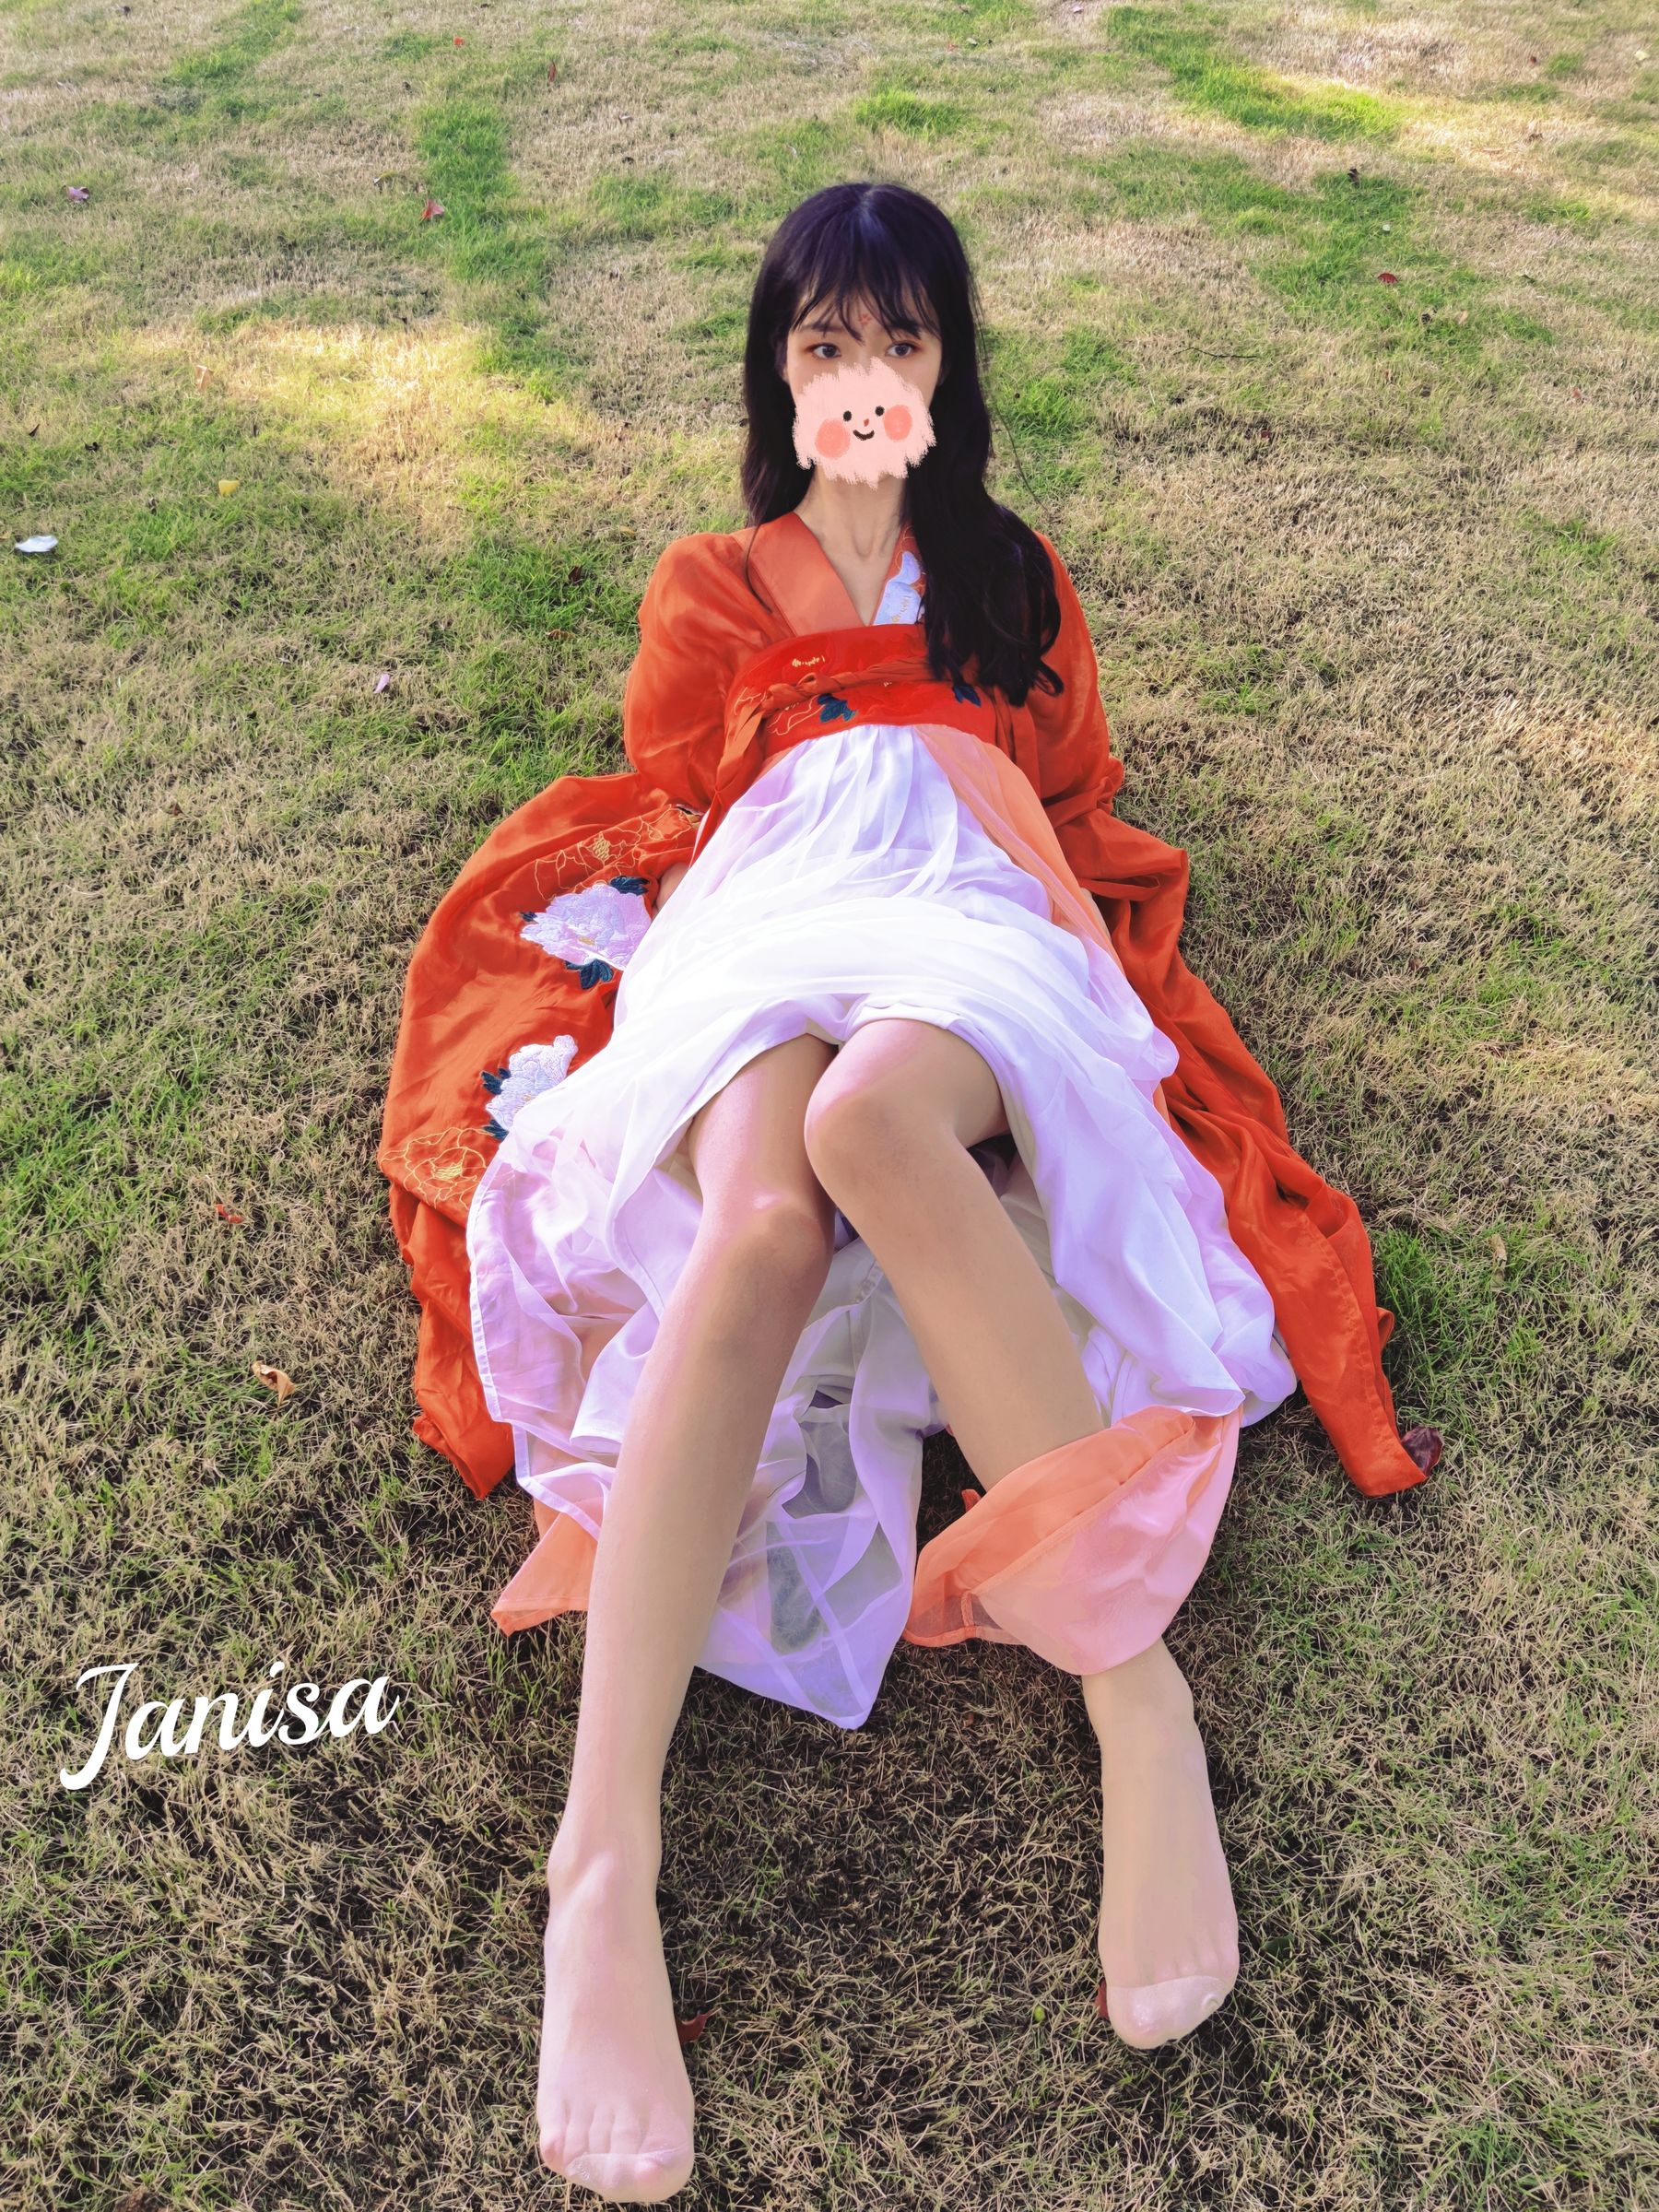 Janisa - 一花一世界/(19P)